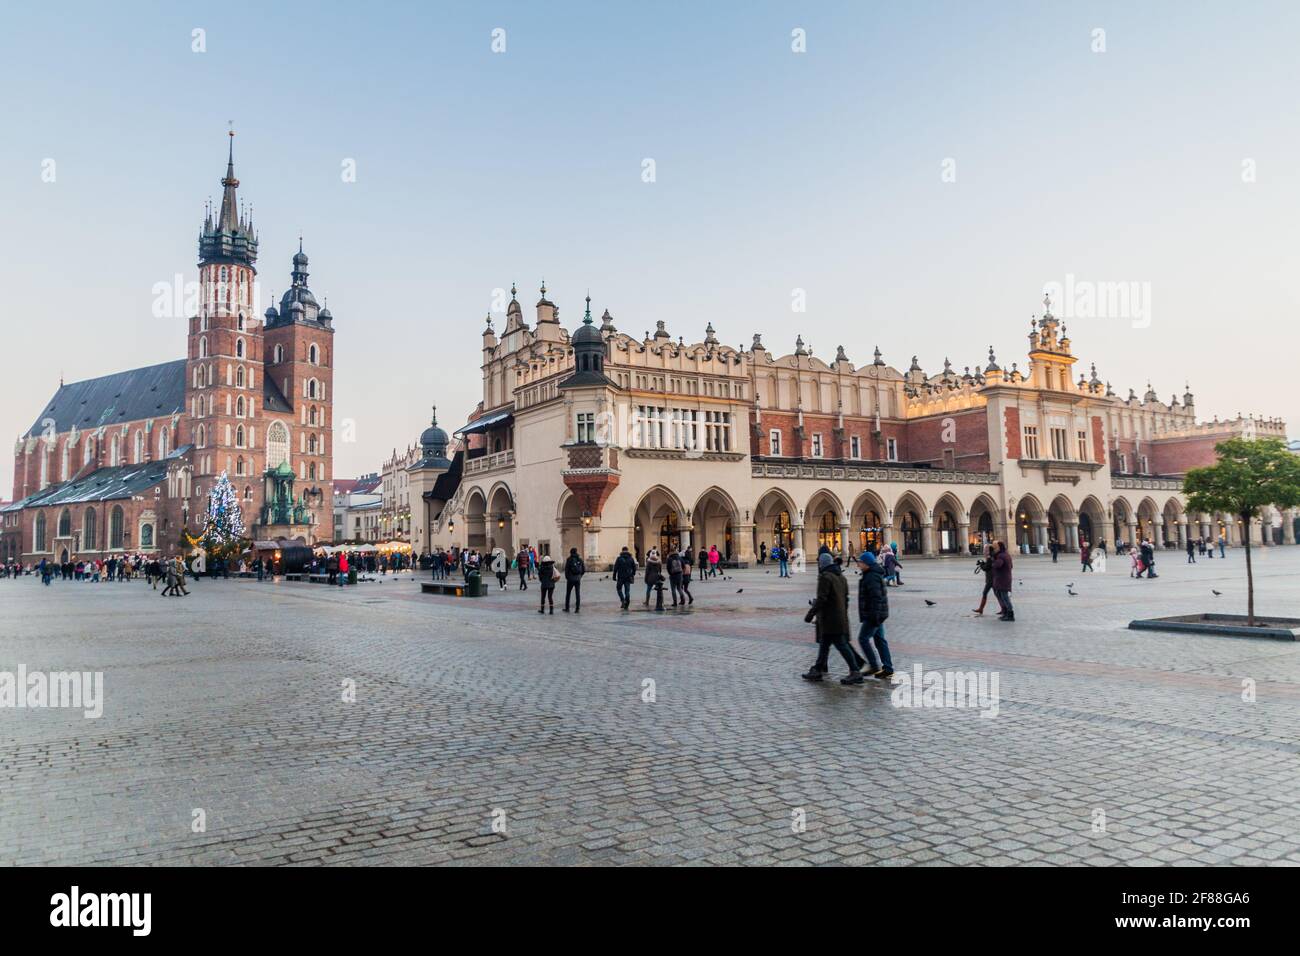 KRAKOW, POLAND - DECEMBER 2, 2017: Medieval square Rynek Glowny, St. Mary's Basilica and The Cloth Hall in Krakow, Poland Stock Photo